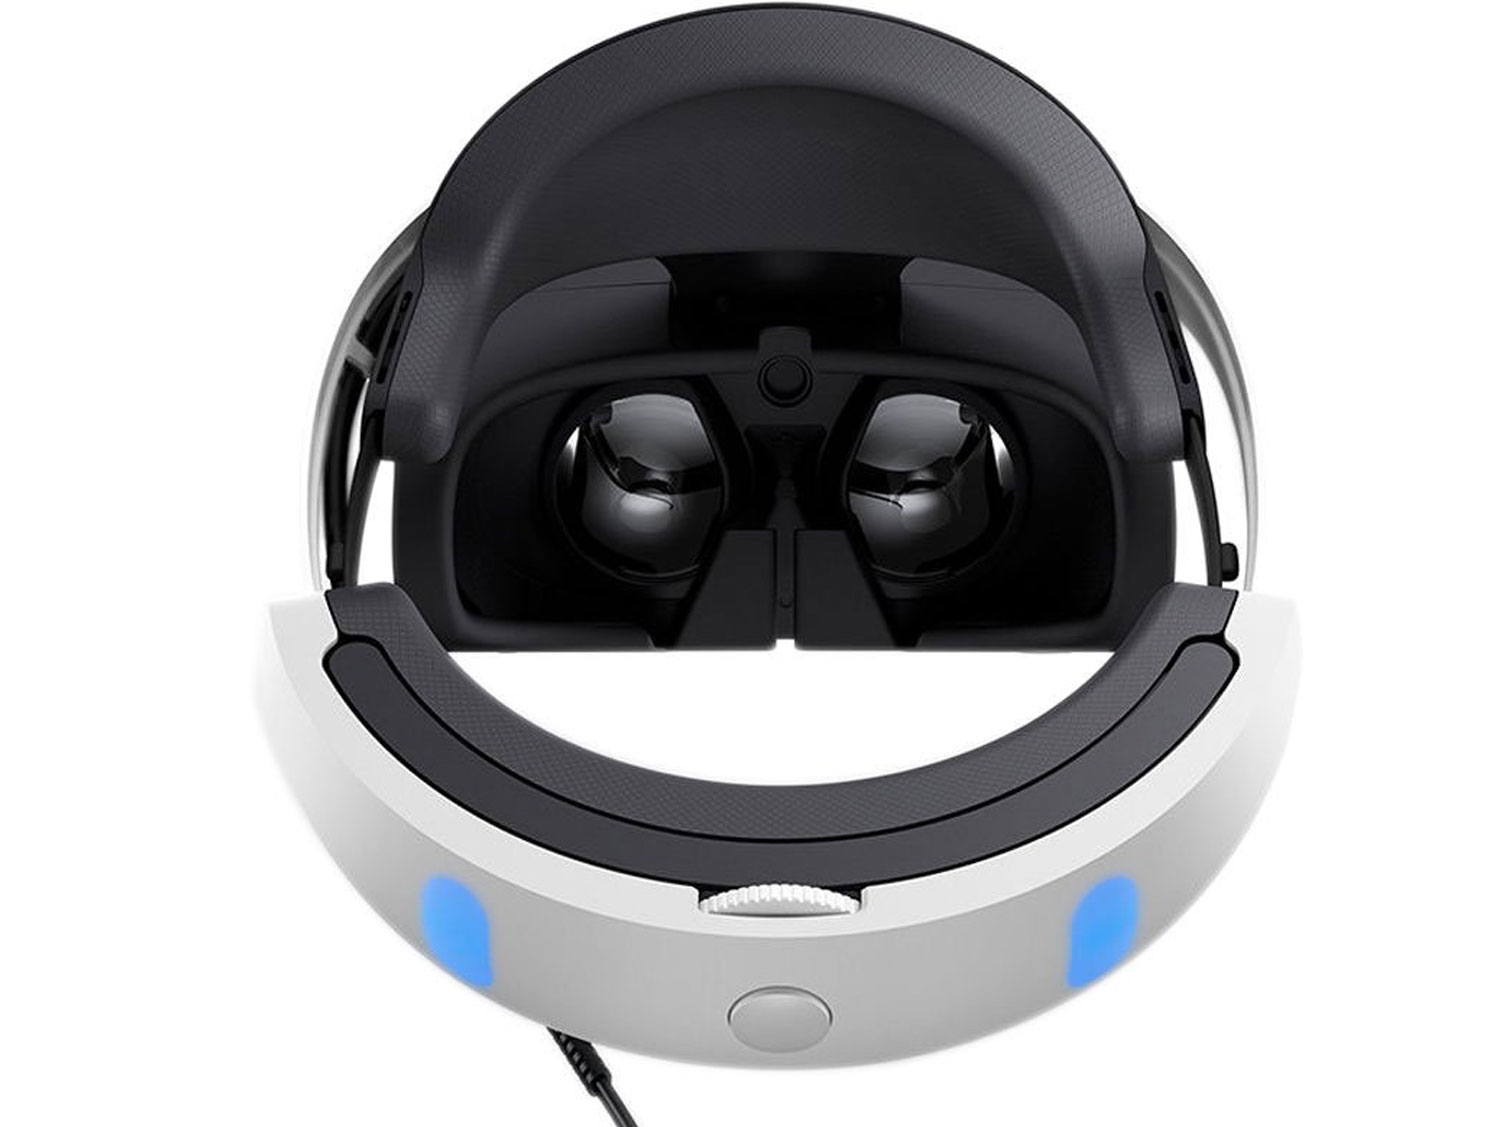 PS4 VR Headset ready for rental in Sri Lanka